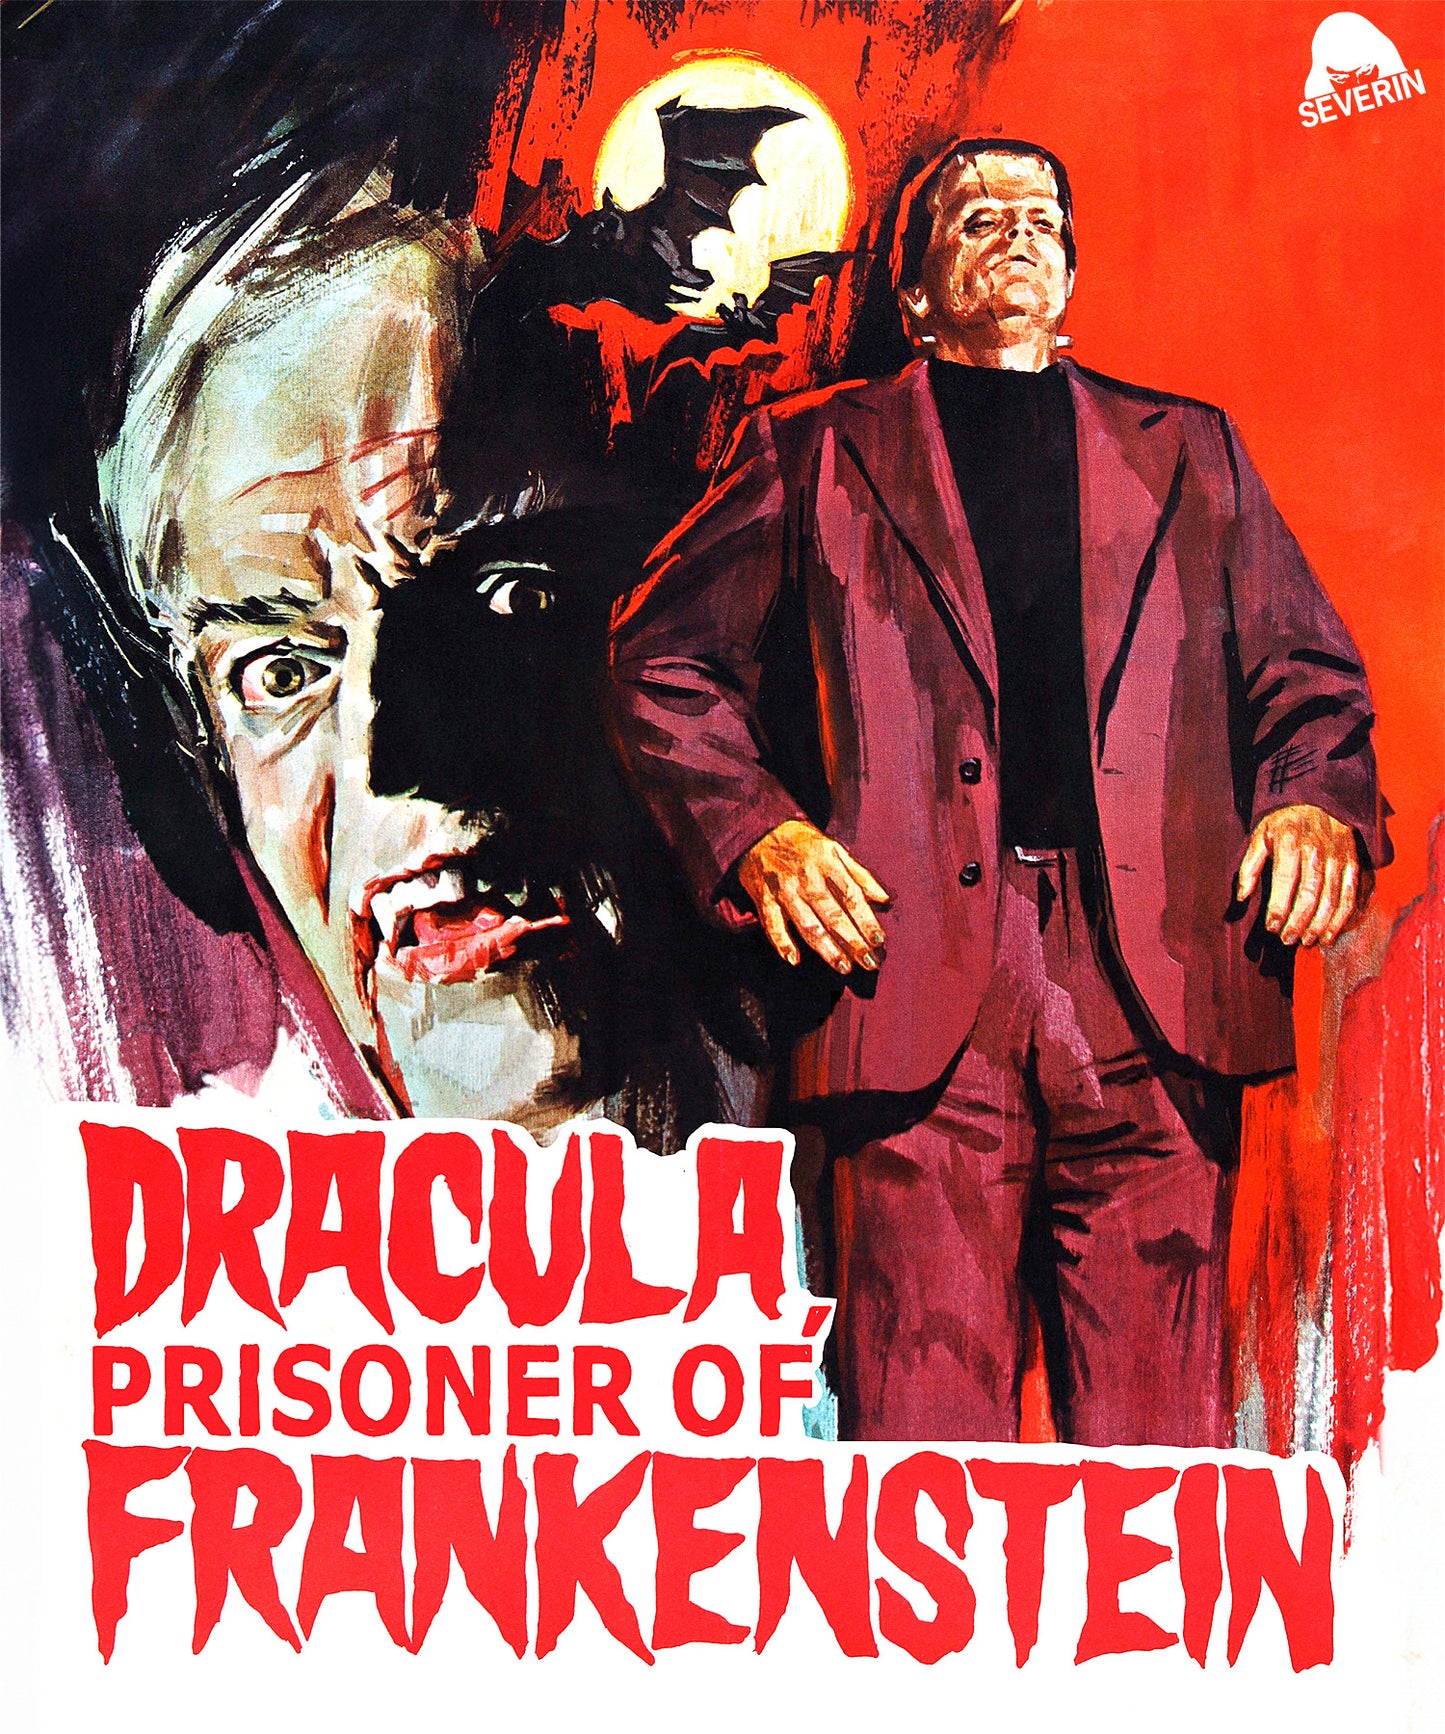 Dracula, Prisoner of Frankenstein Blu-ray  (Severin Films) [Preorder]